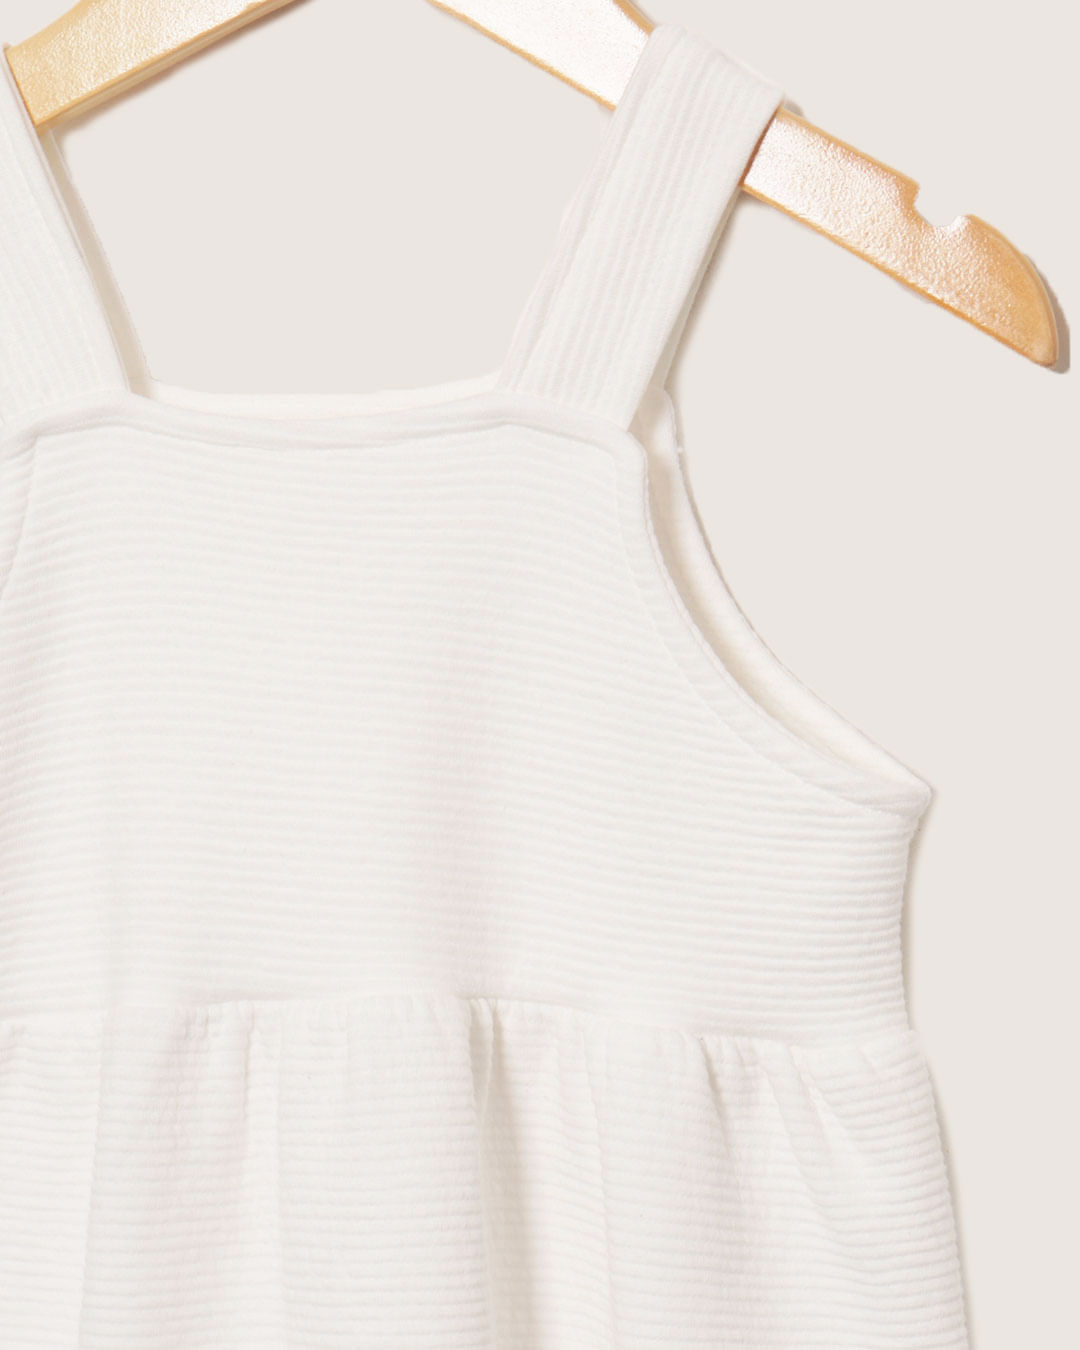 Vestido Bebê Texturizado Alças Medias Off White